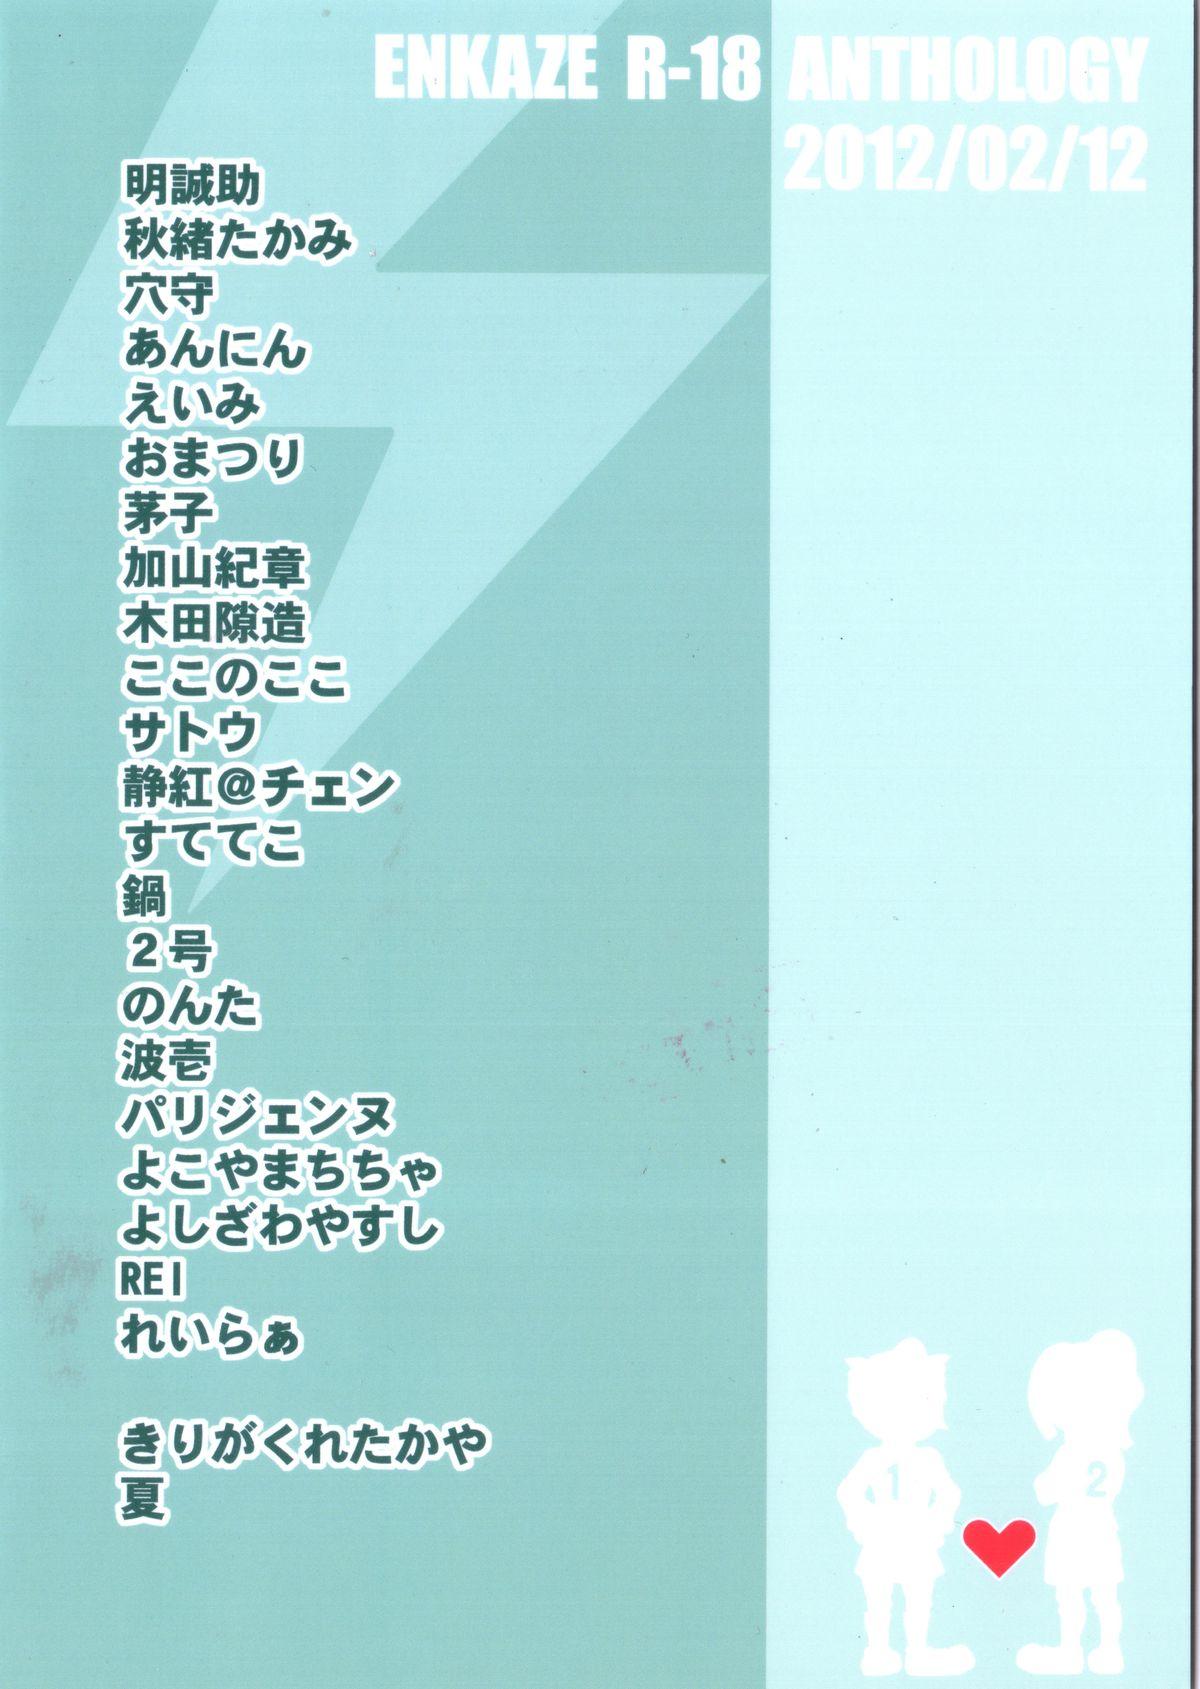 Soapy Kirigakure Takaya (Aniki Otokodou) - ×××× Yarouze! (Inazuma Eleven) - Inazuma eleven New - Page 2